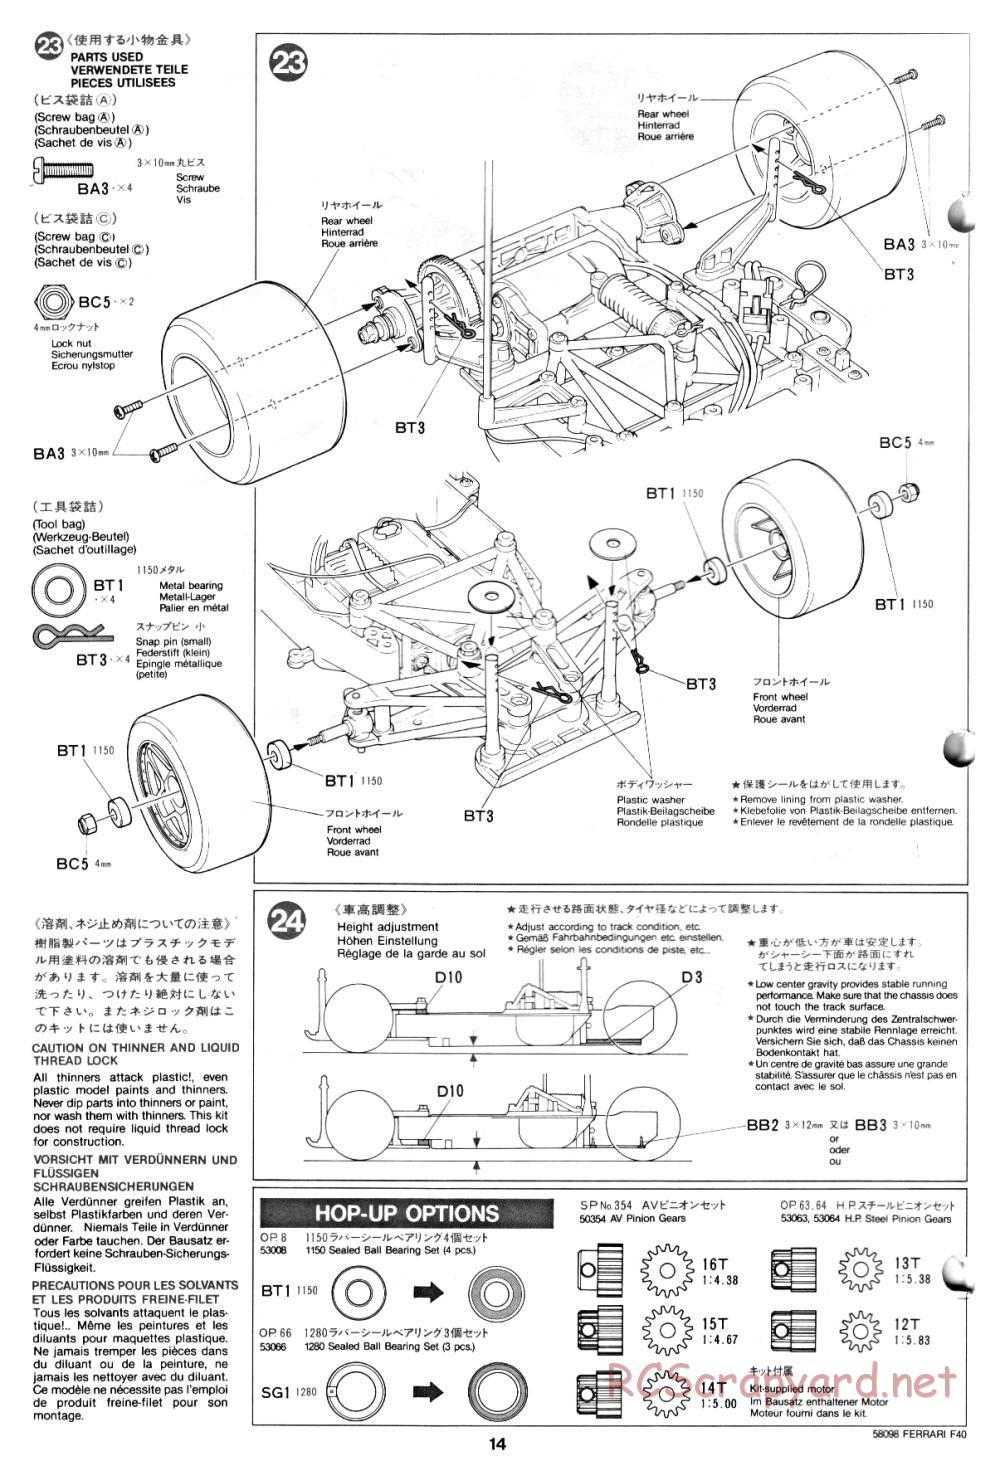 Tamiya - Ferrari F40 - 58098 - Manual - Page 14